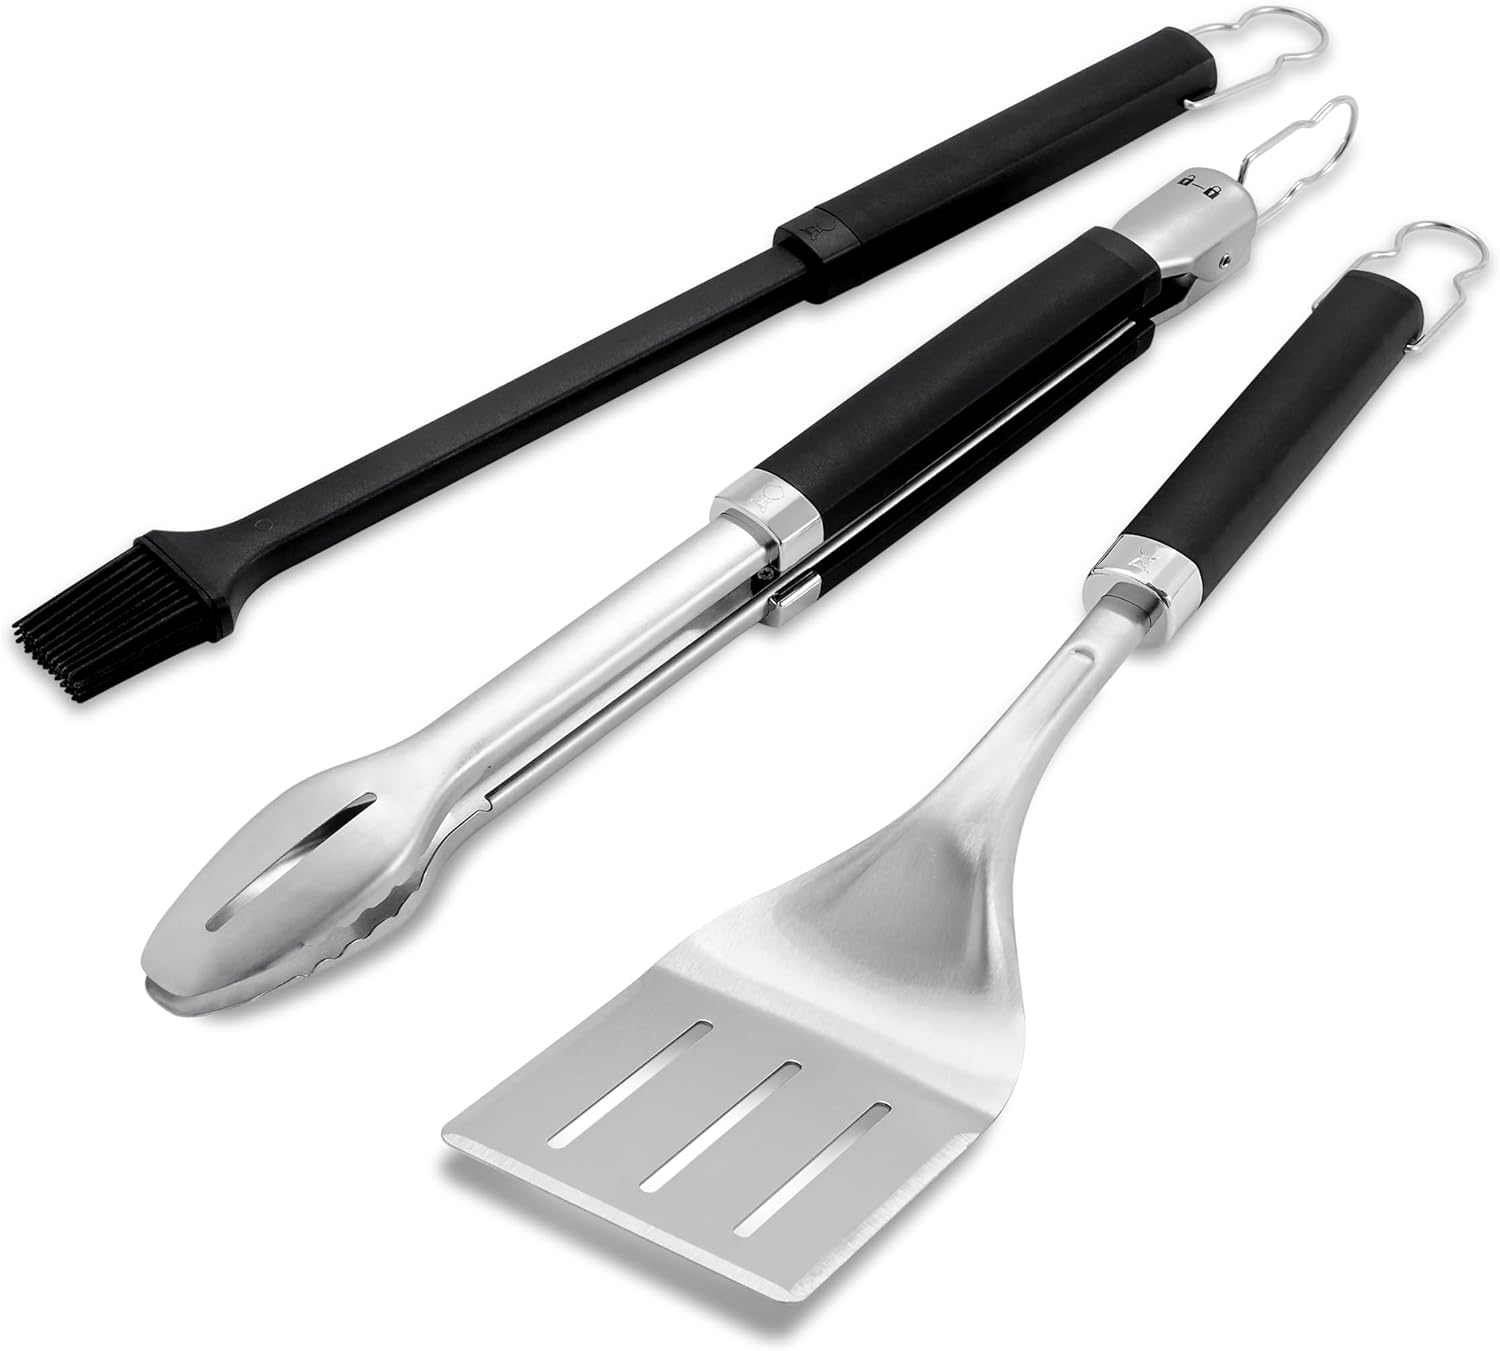 3-Piece Weber Precision Grill Tool Set (Tongs, Spatula & Basting Brush) $16 + Free Shipping